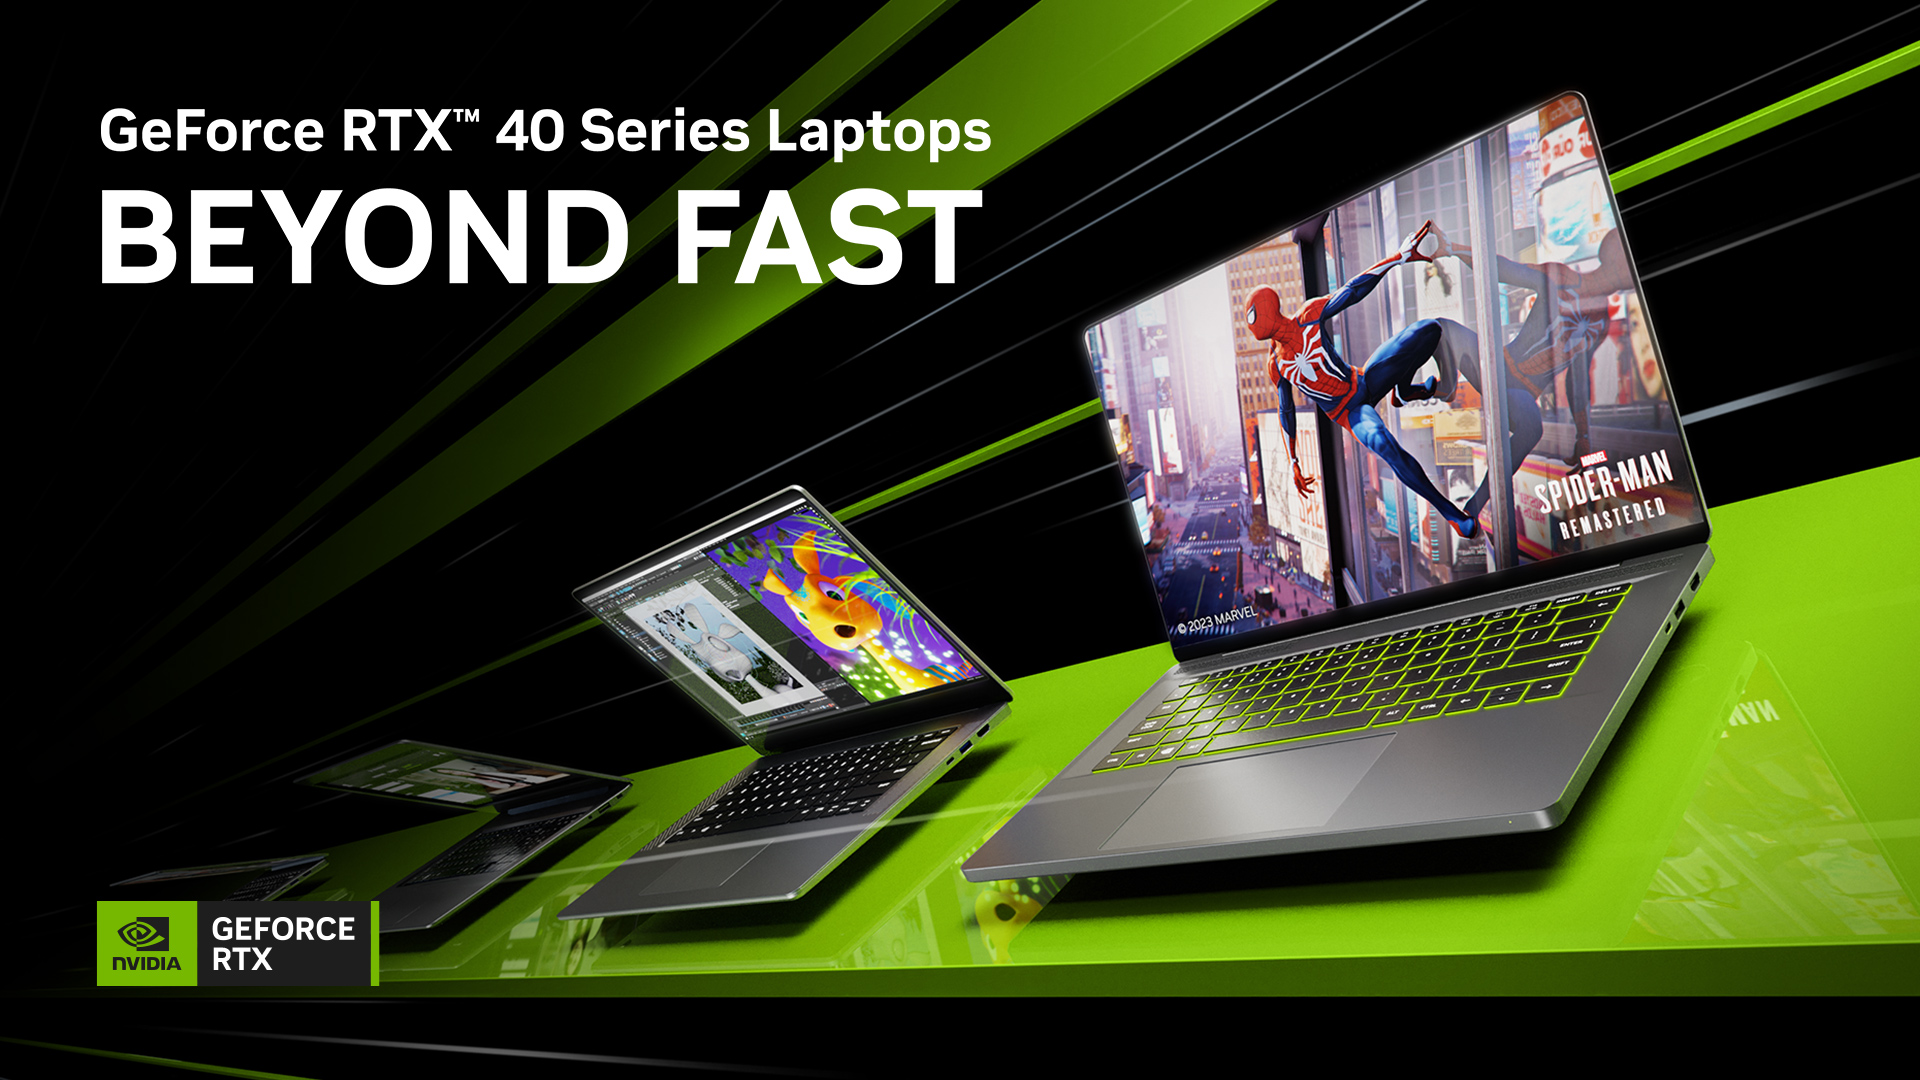 Nuovi laptop Studio alimentati dalle GPU GeForce RTX Serie 40